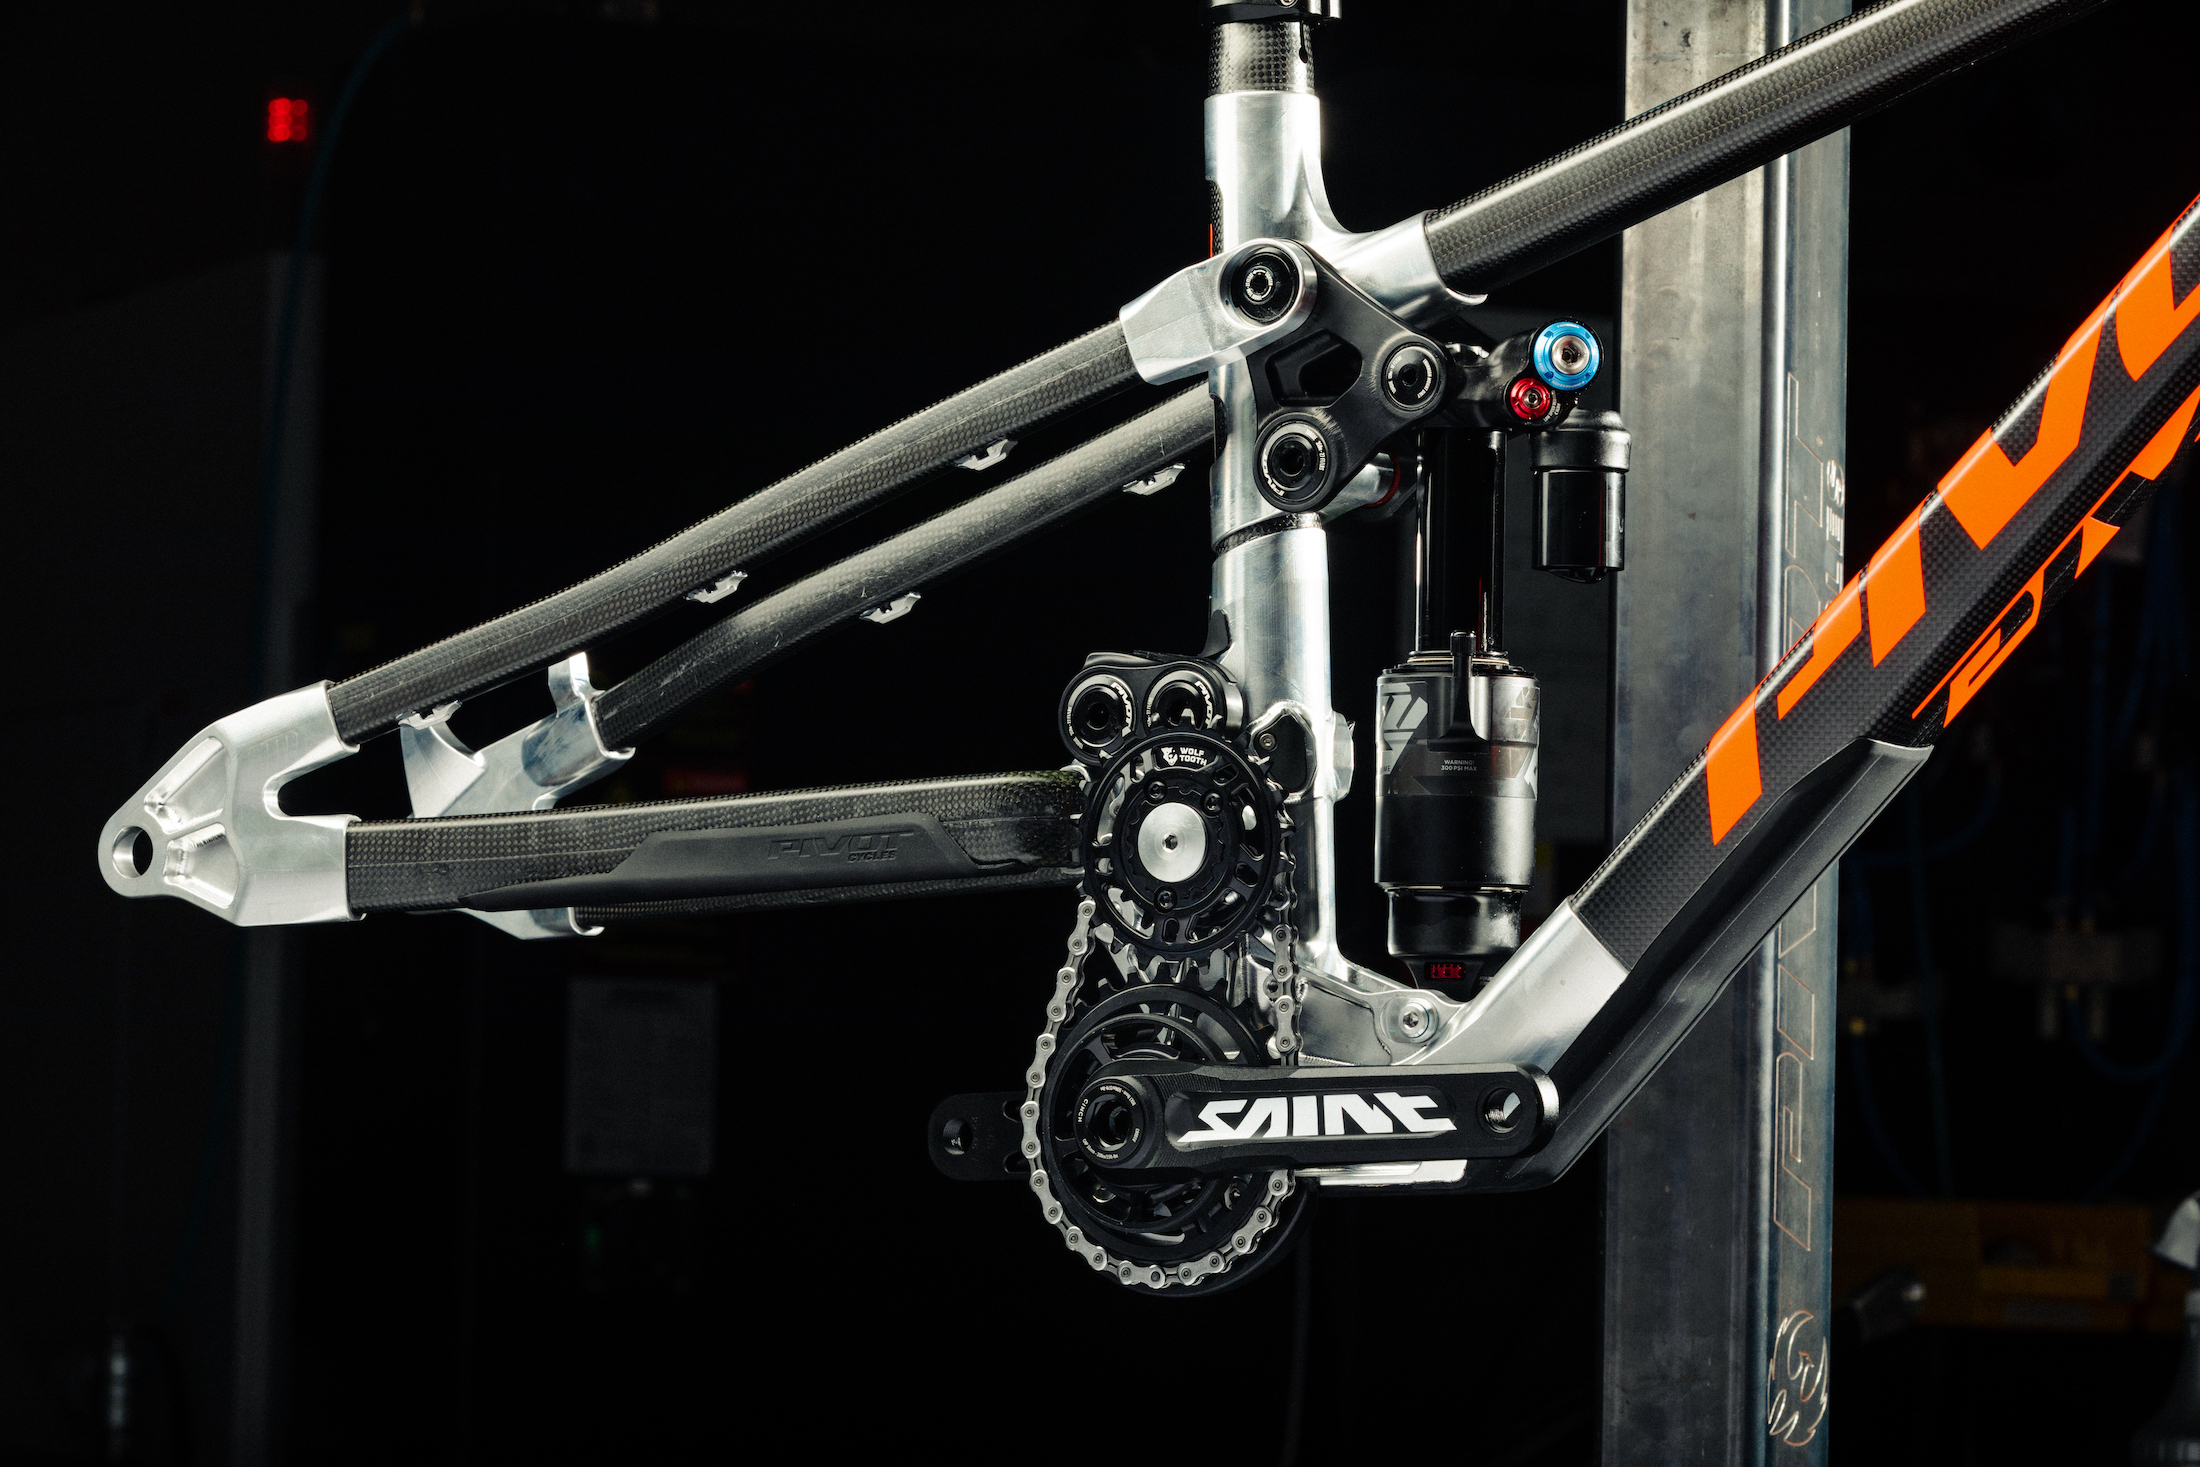 Behindthescenes with Pivot's radical new prototype downhill bikes